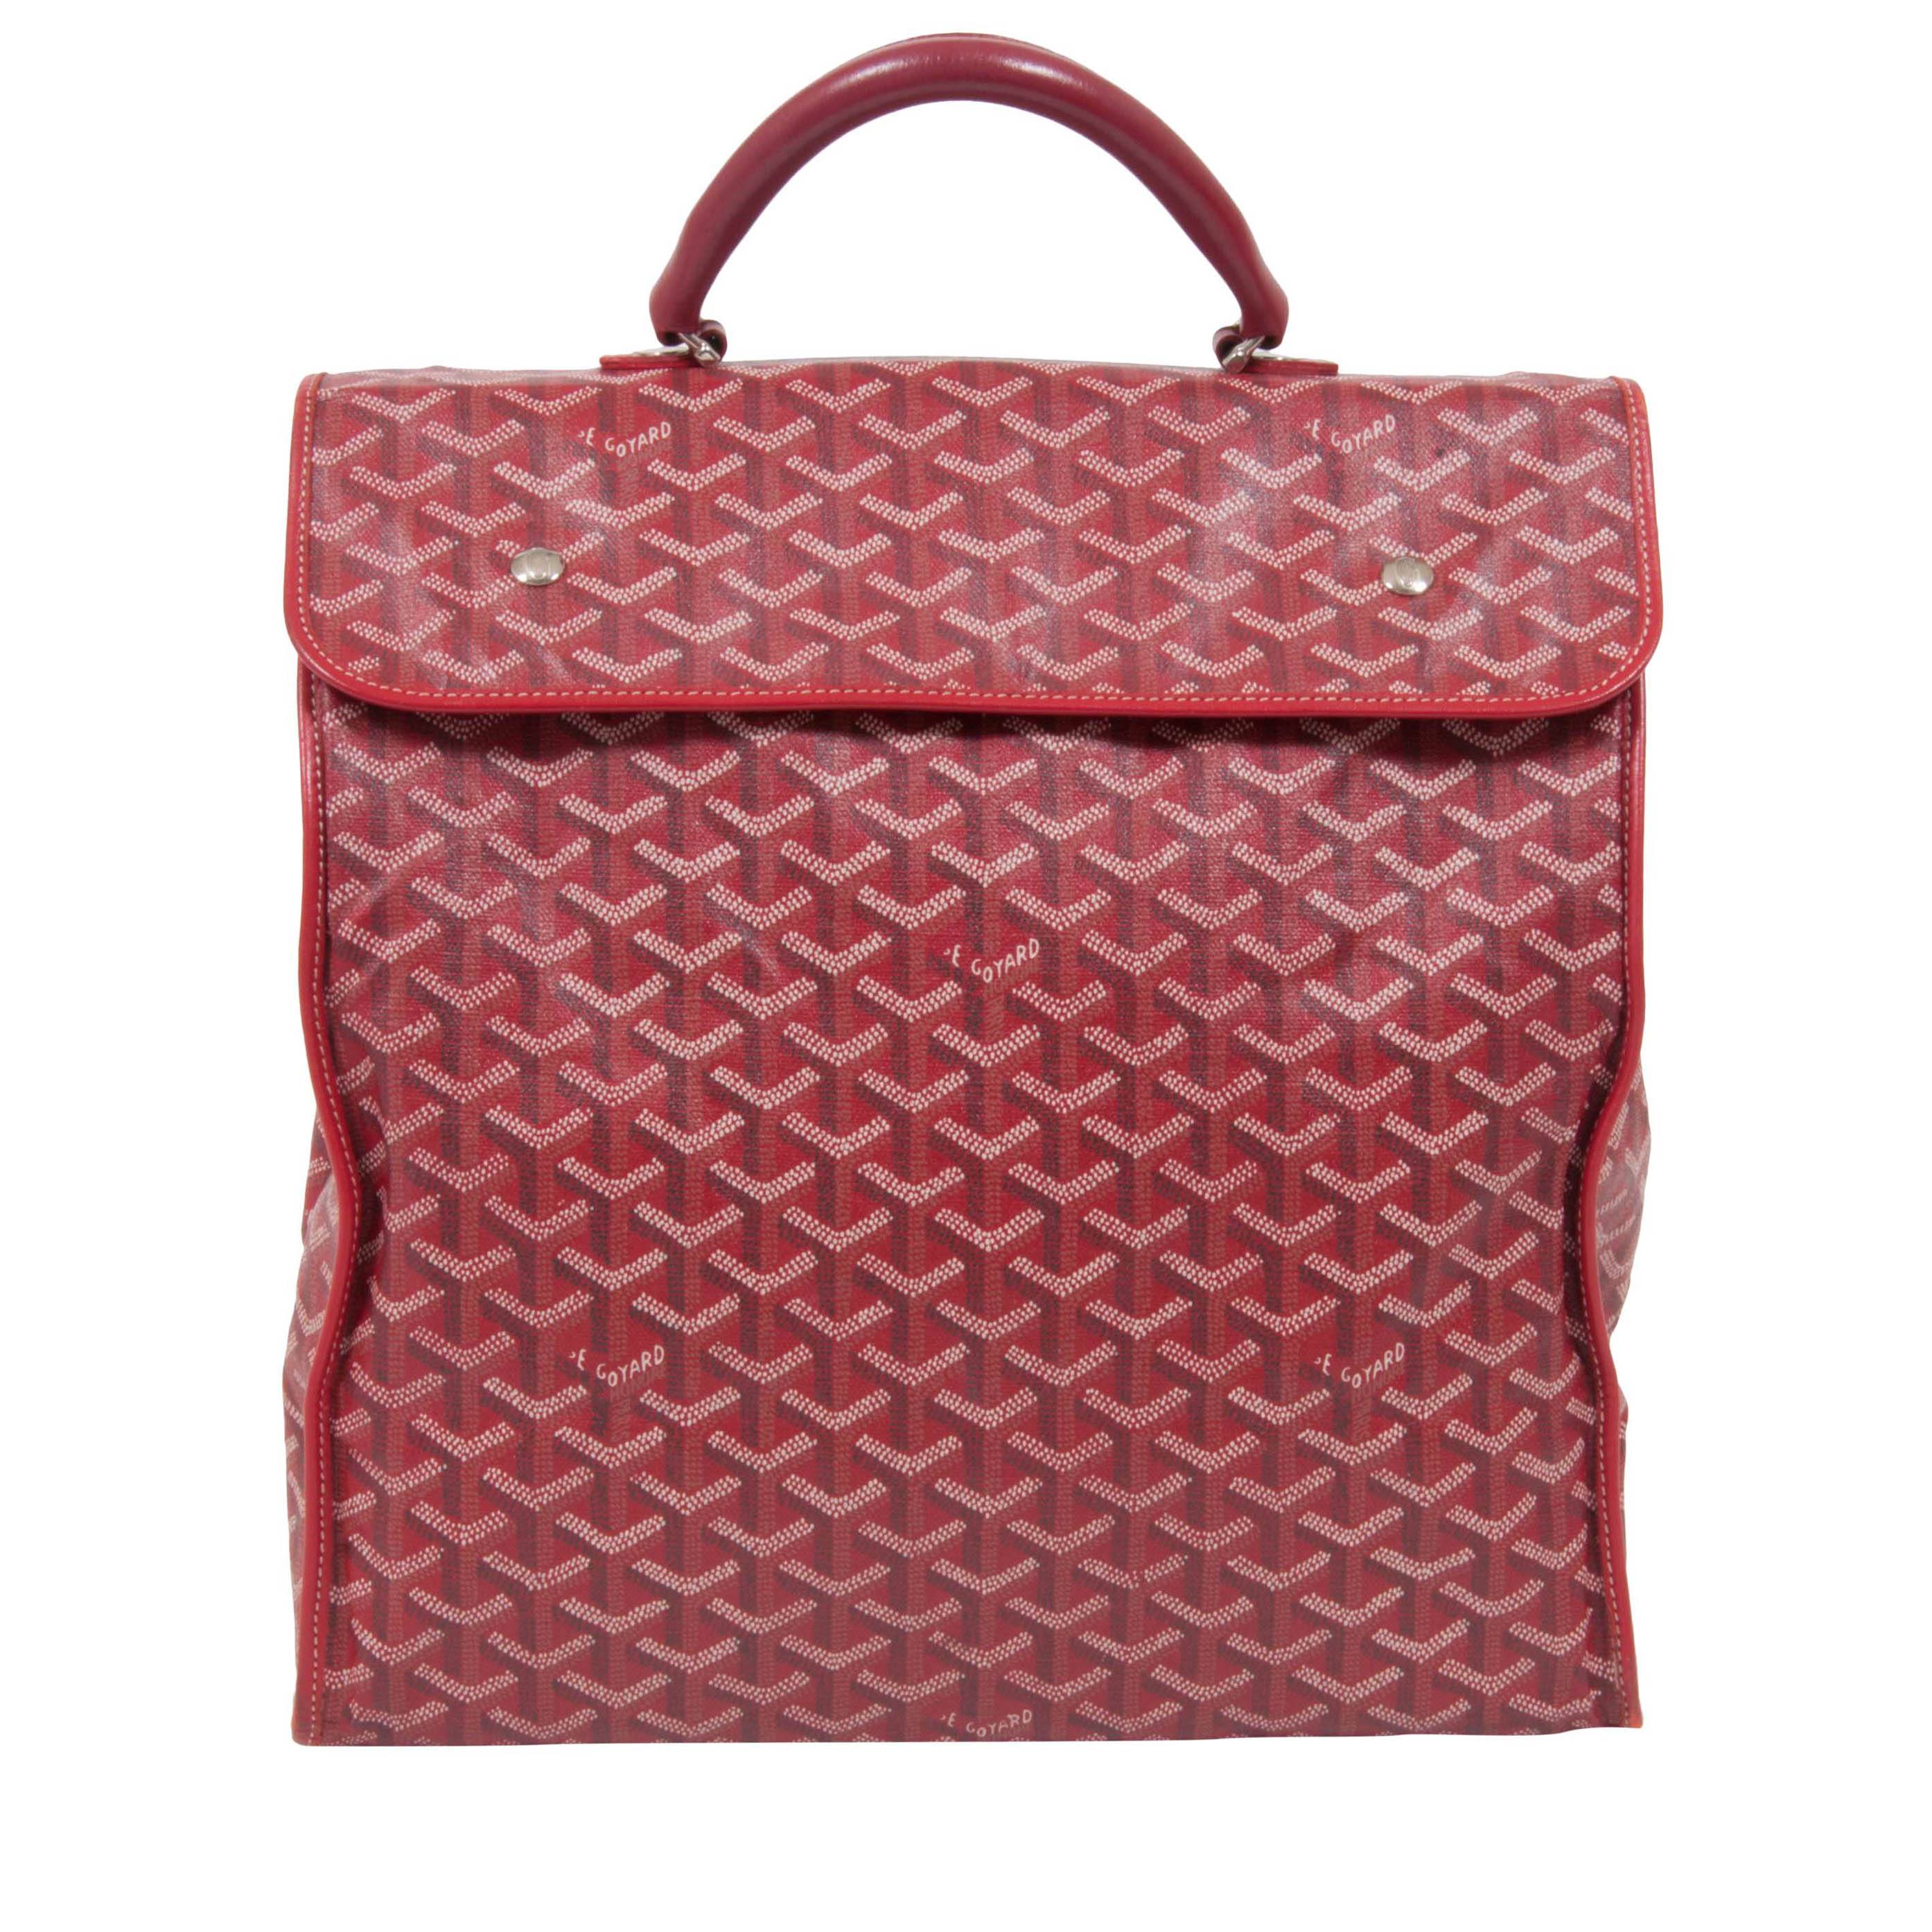 Goyard/ Goya handbag Saint Leger backpack foldable canvas handbag